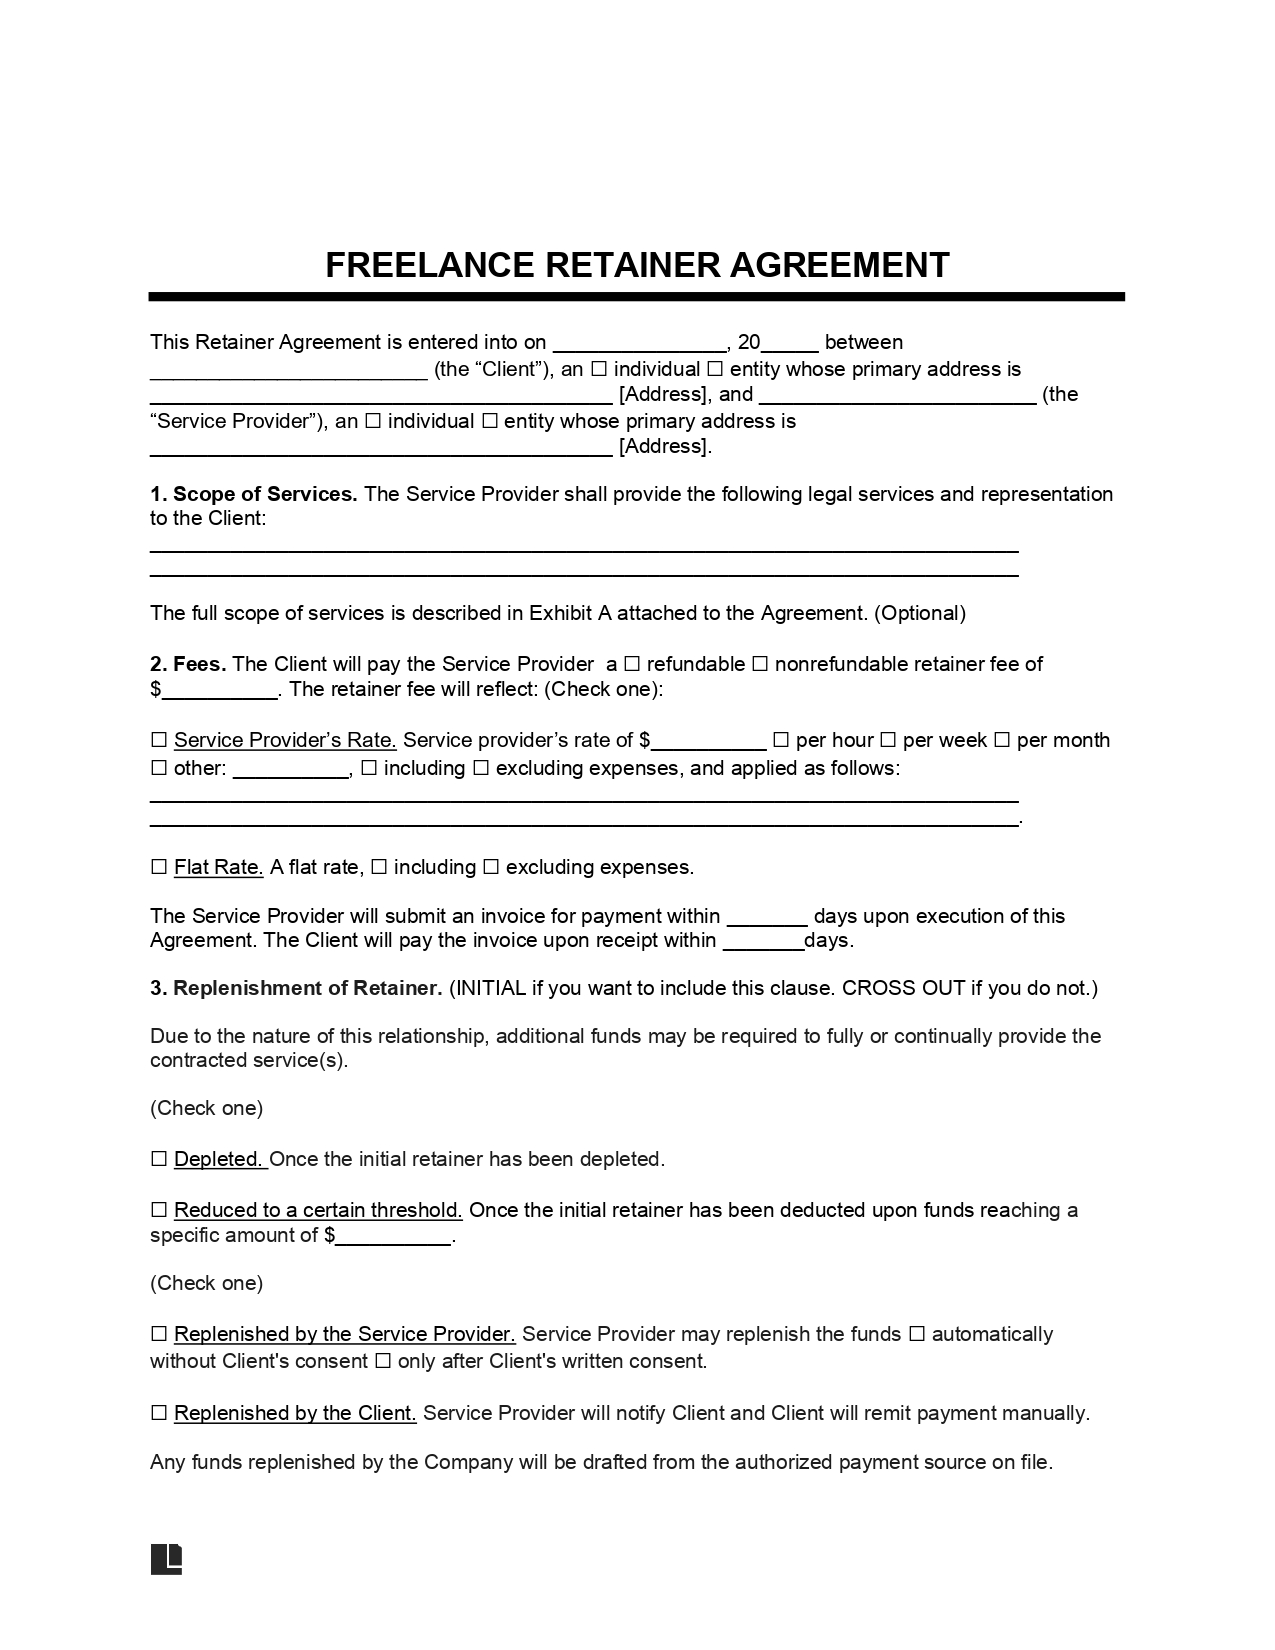 Freelance Retainer Agreement screenshot